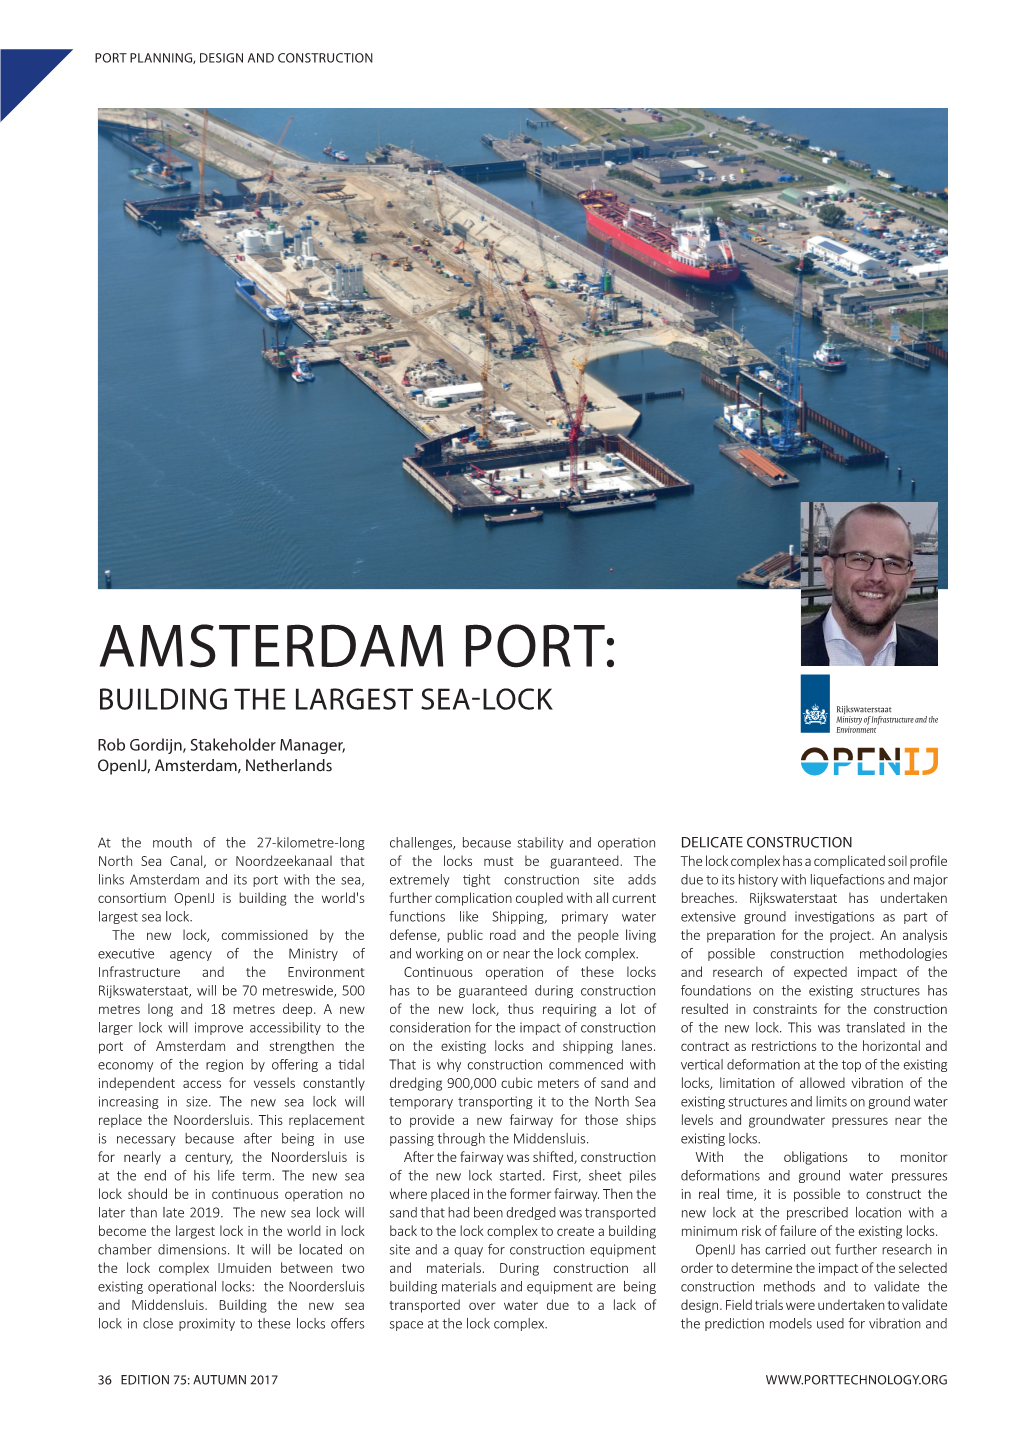 Amsterdam Port: Building the Largest Sea-Lock